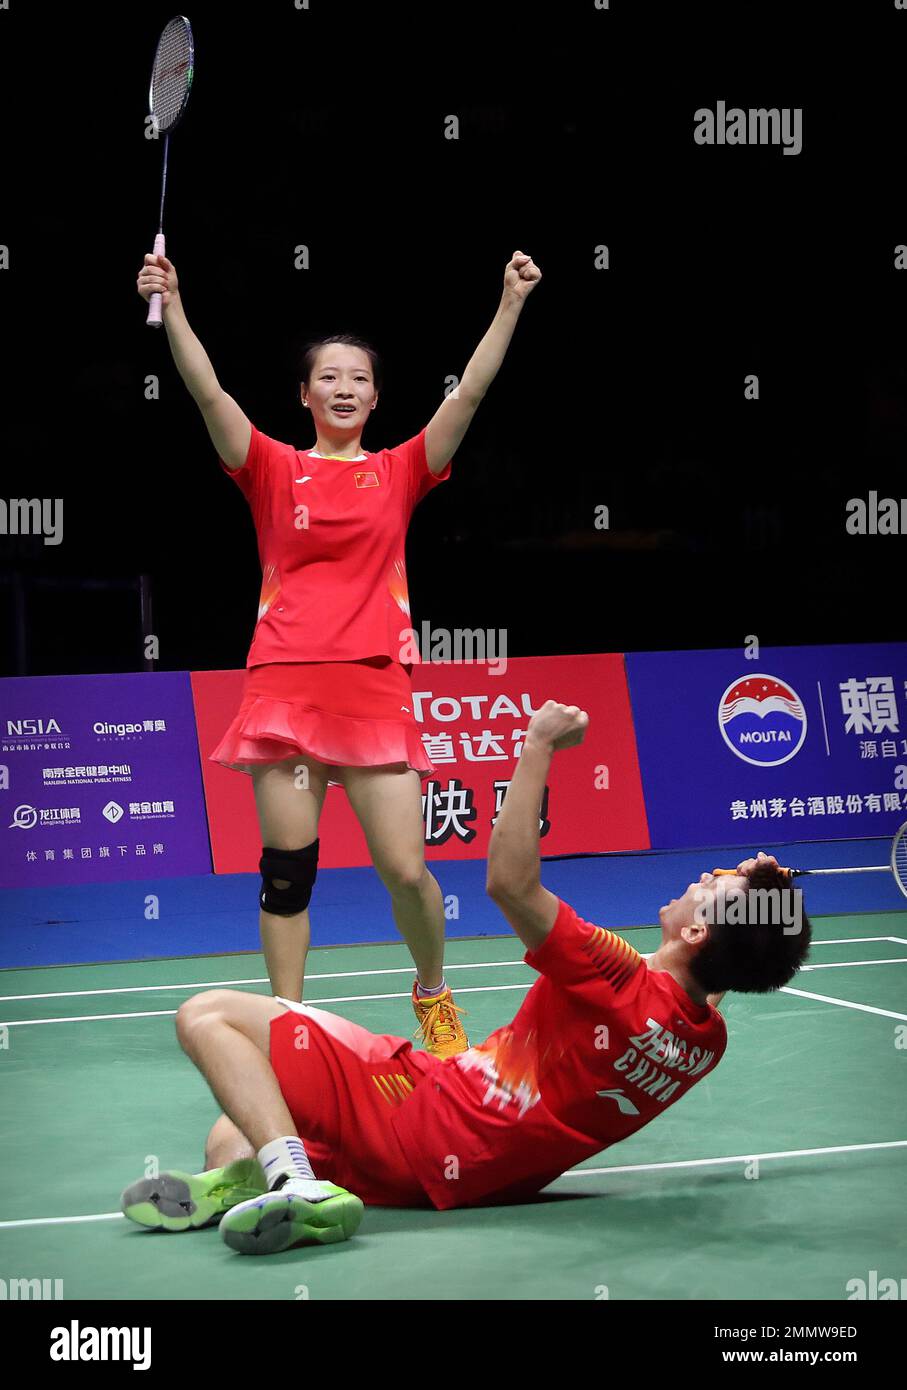 Huang Yaqiong, top, and Zheng Siwei of China react after beating Wang Yilyu and Huang Dongping of China in their mixed doubles badminton championship match at the BWF World Championships in Nanjing,